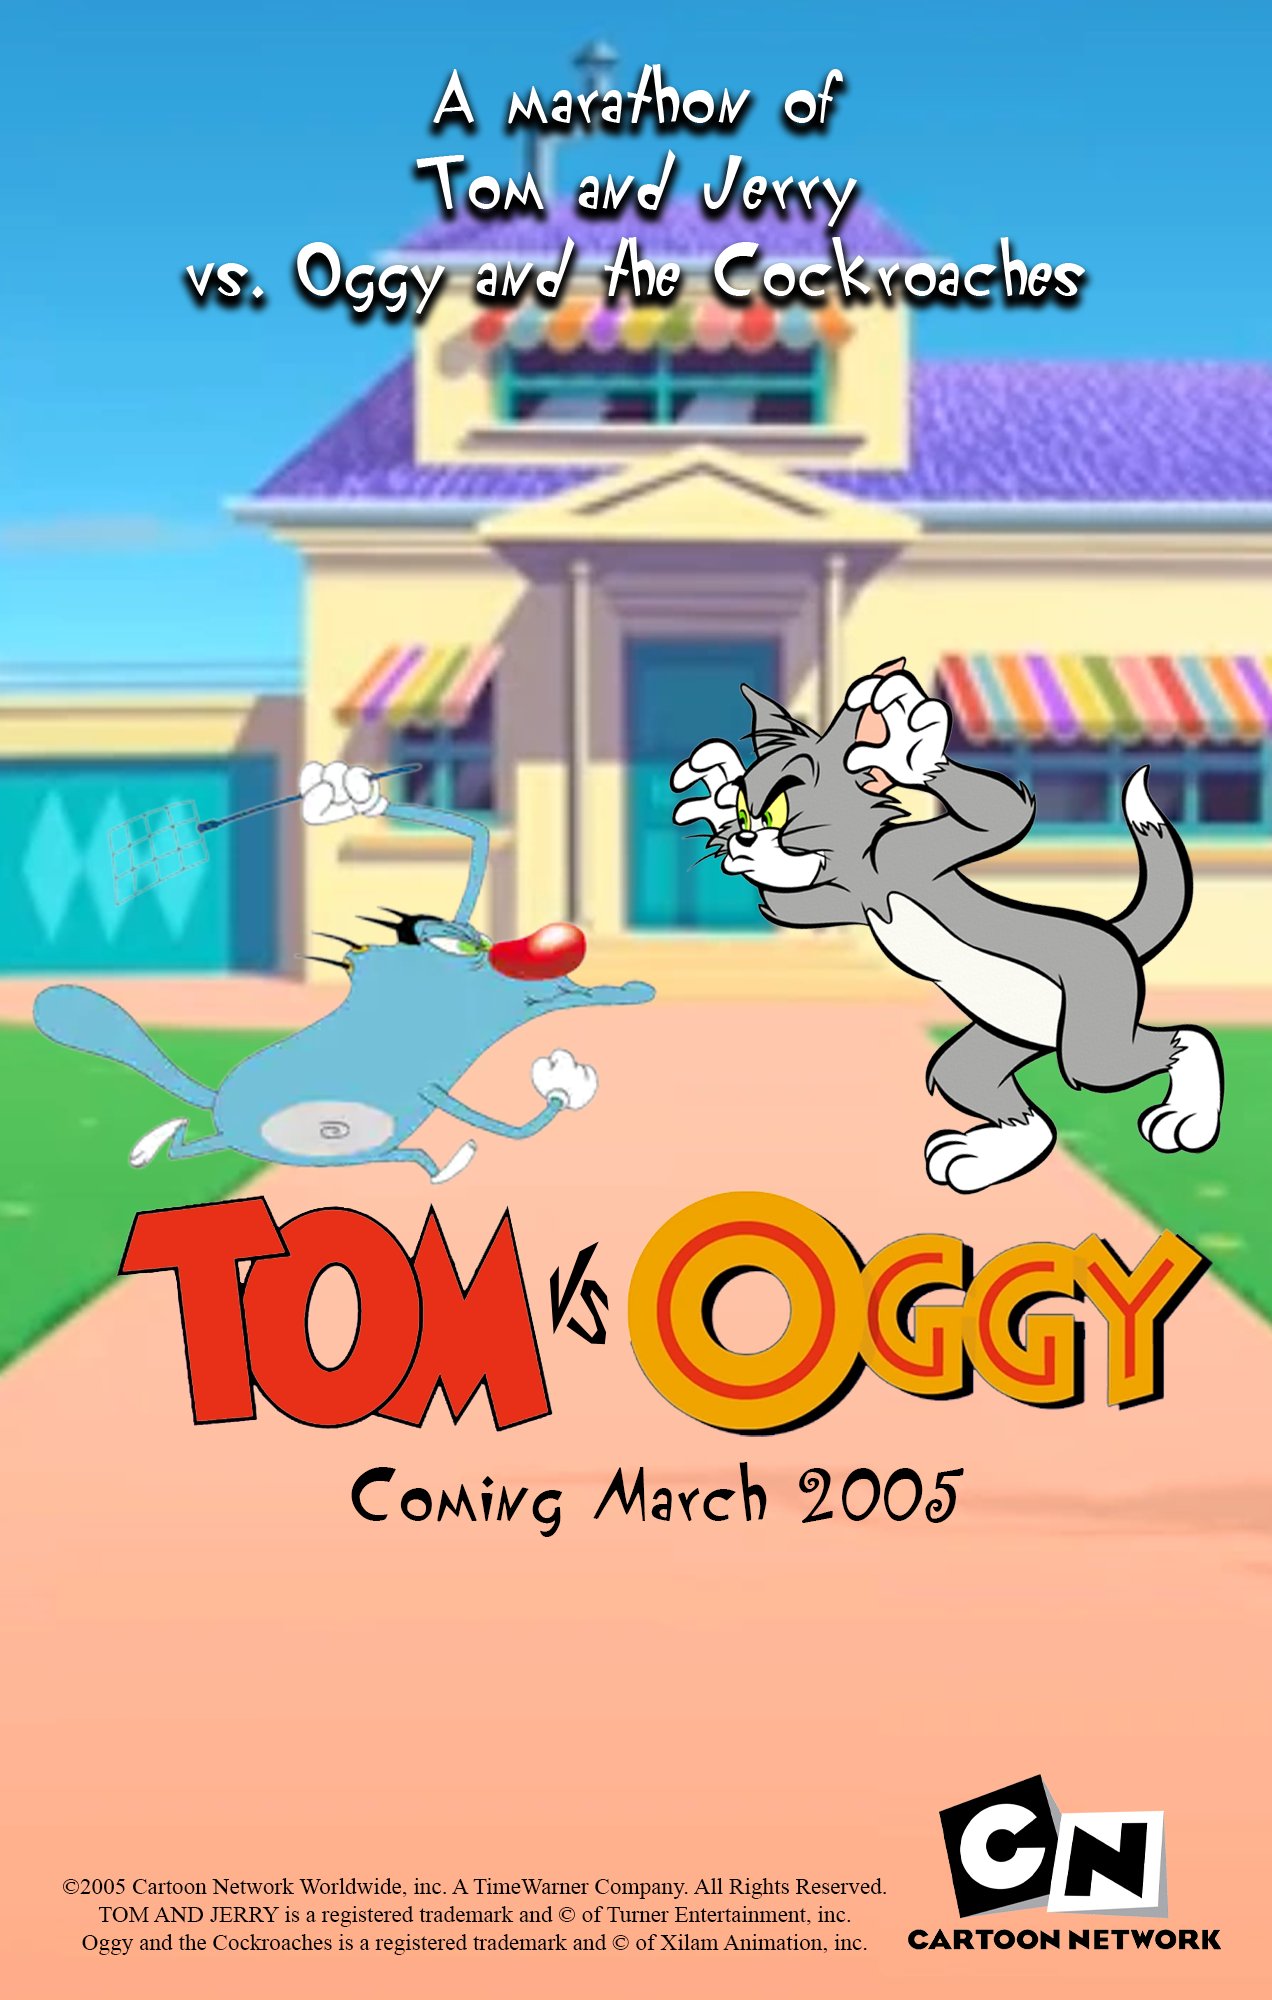 Cartoon Network 2005: Tom vs. Oggy by DannyD1997 on DeviantArt